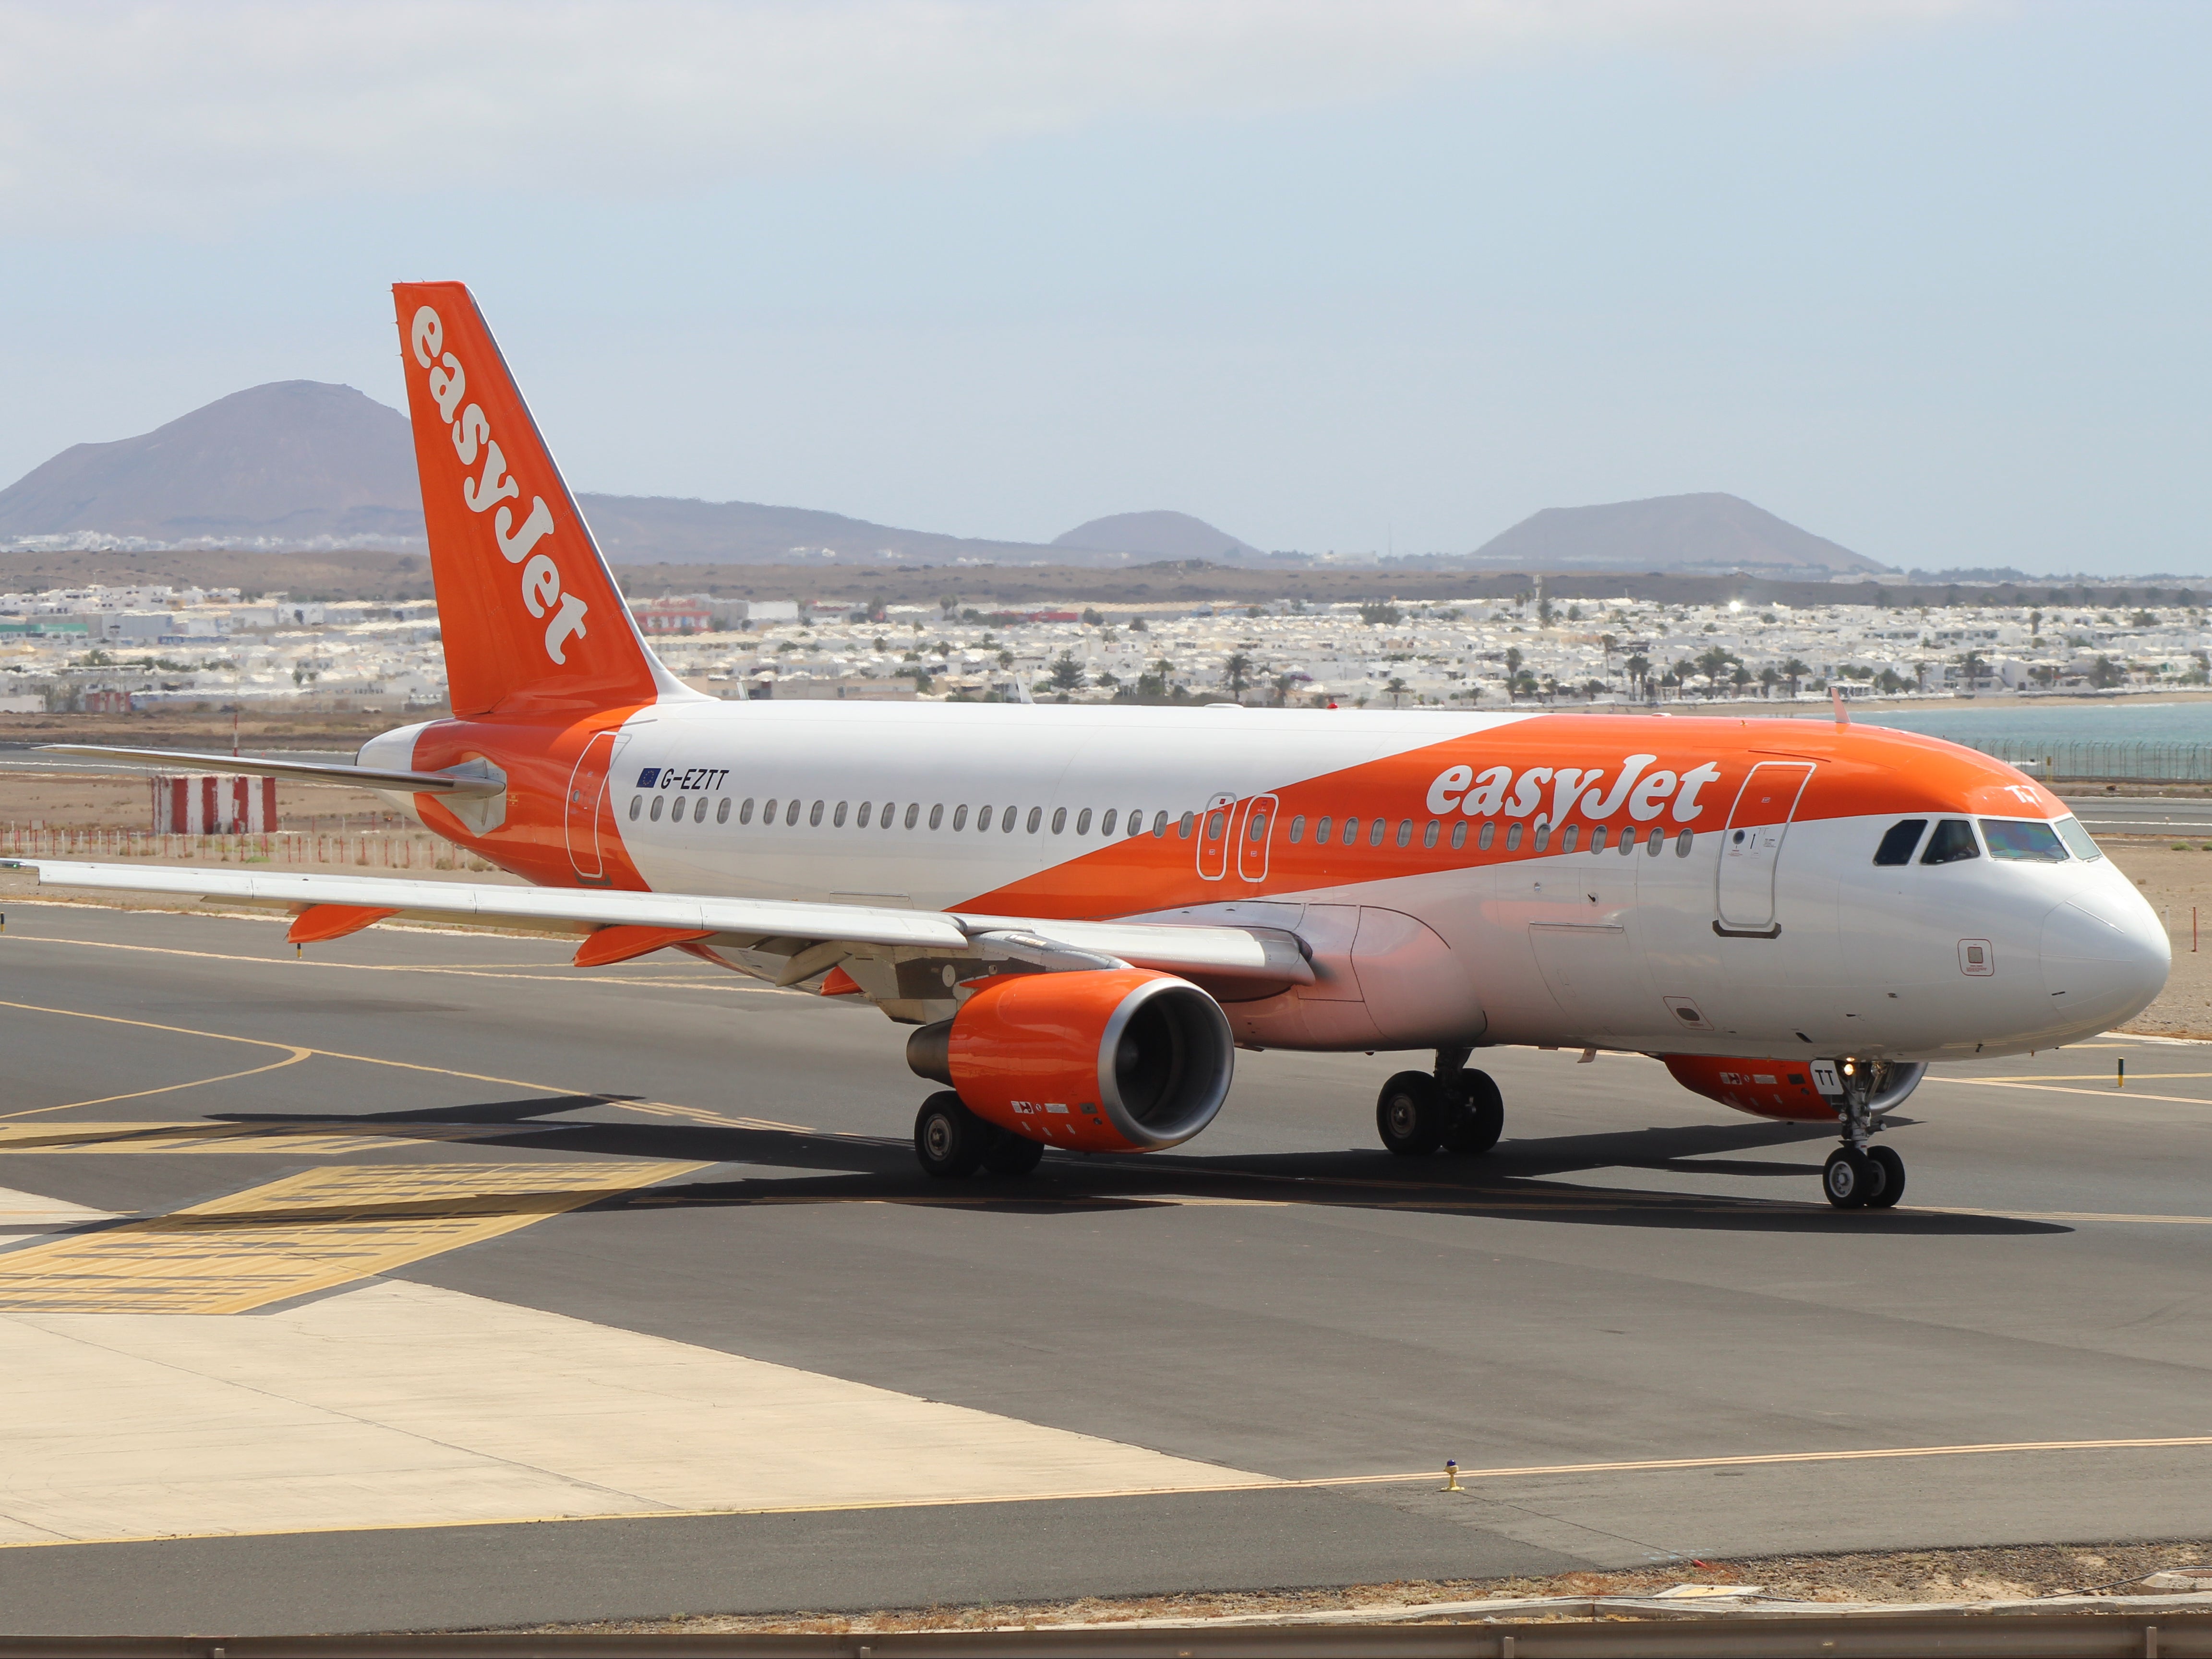 Sun seeking: easyJet Airbus A320 taxiing in Spain